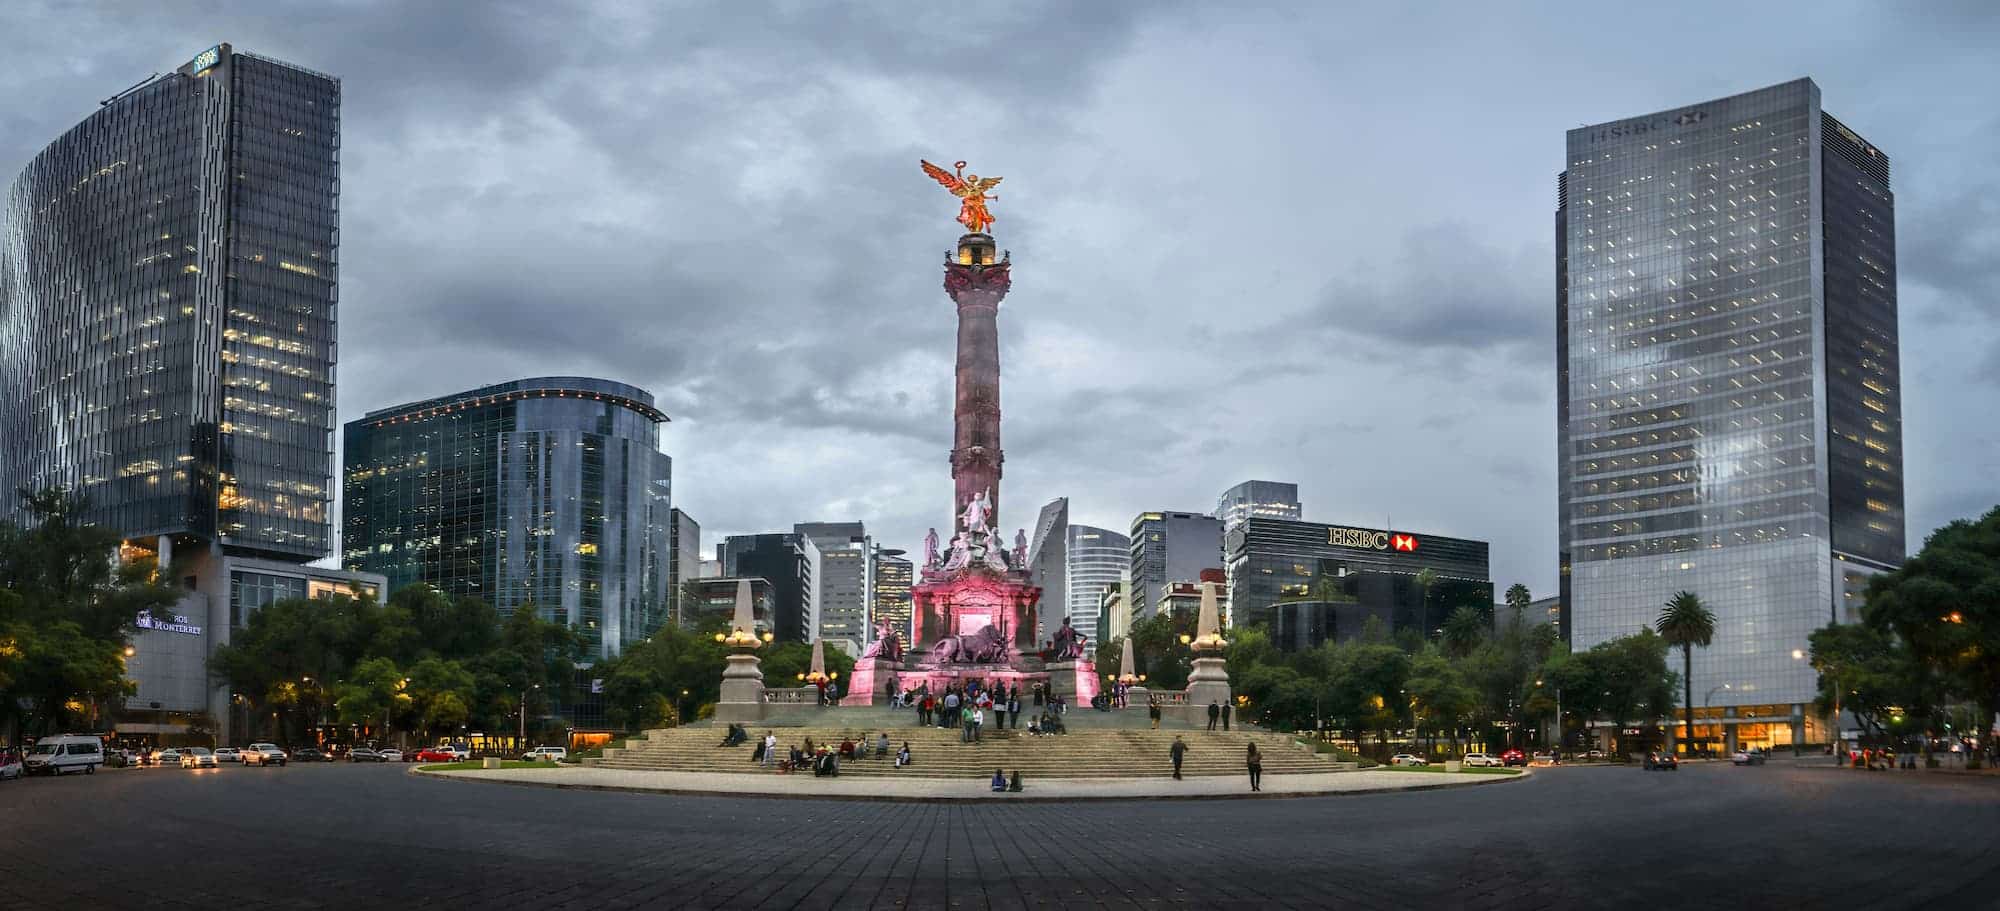 Mexico City Monument